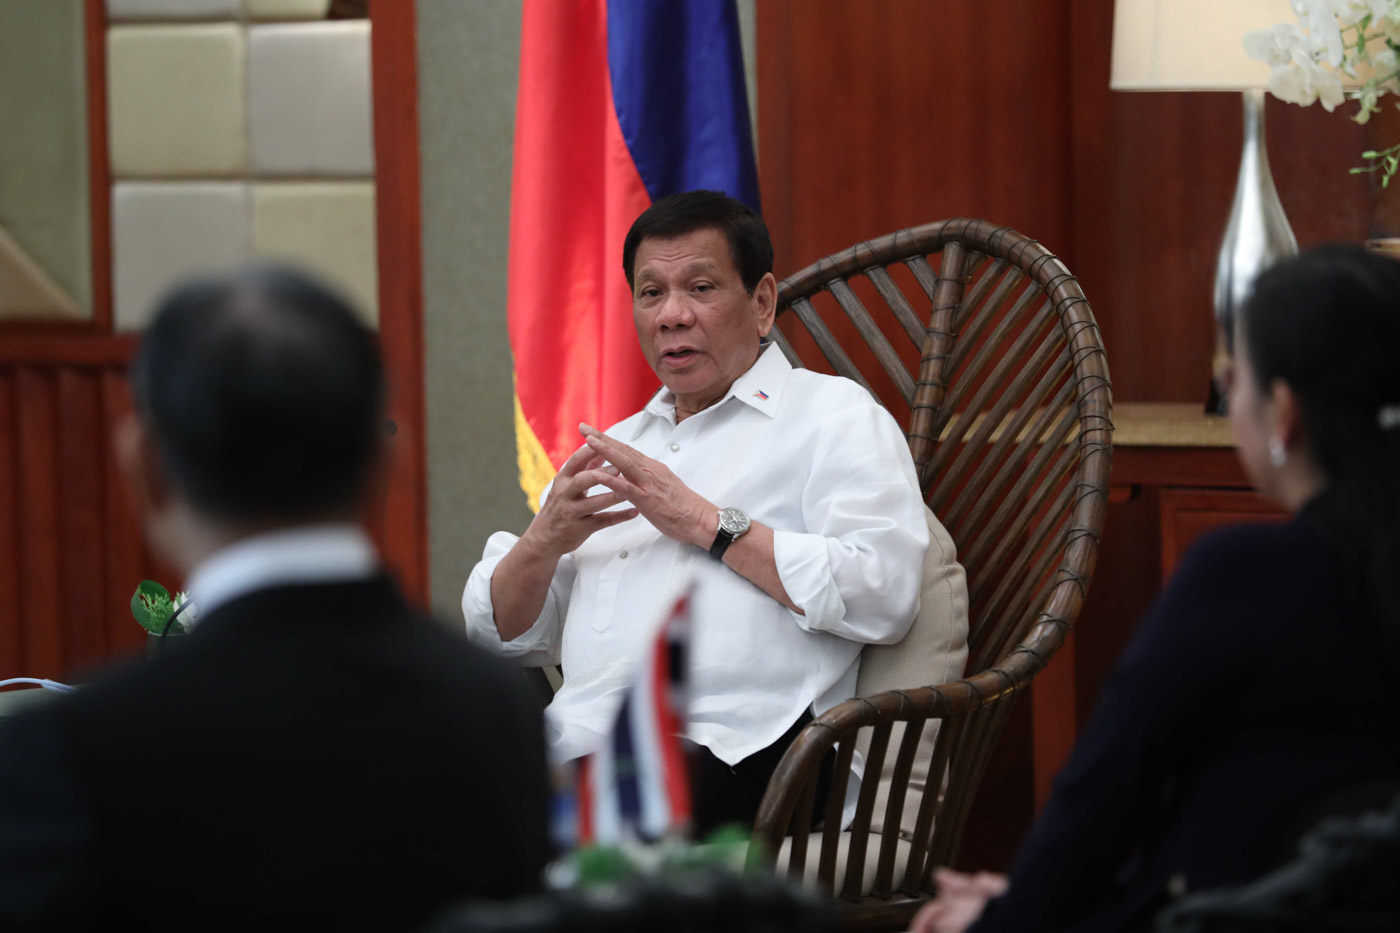 BARANGAY POLLS. President Duterte thinks barangay elections should be postponed again. Presidential photo 